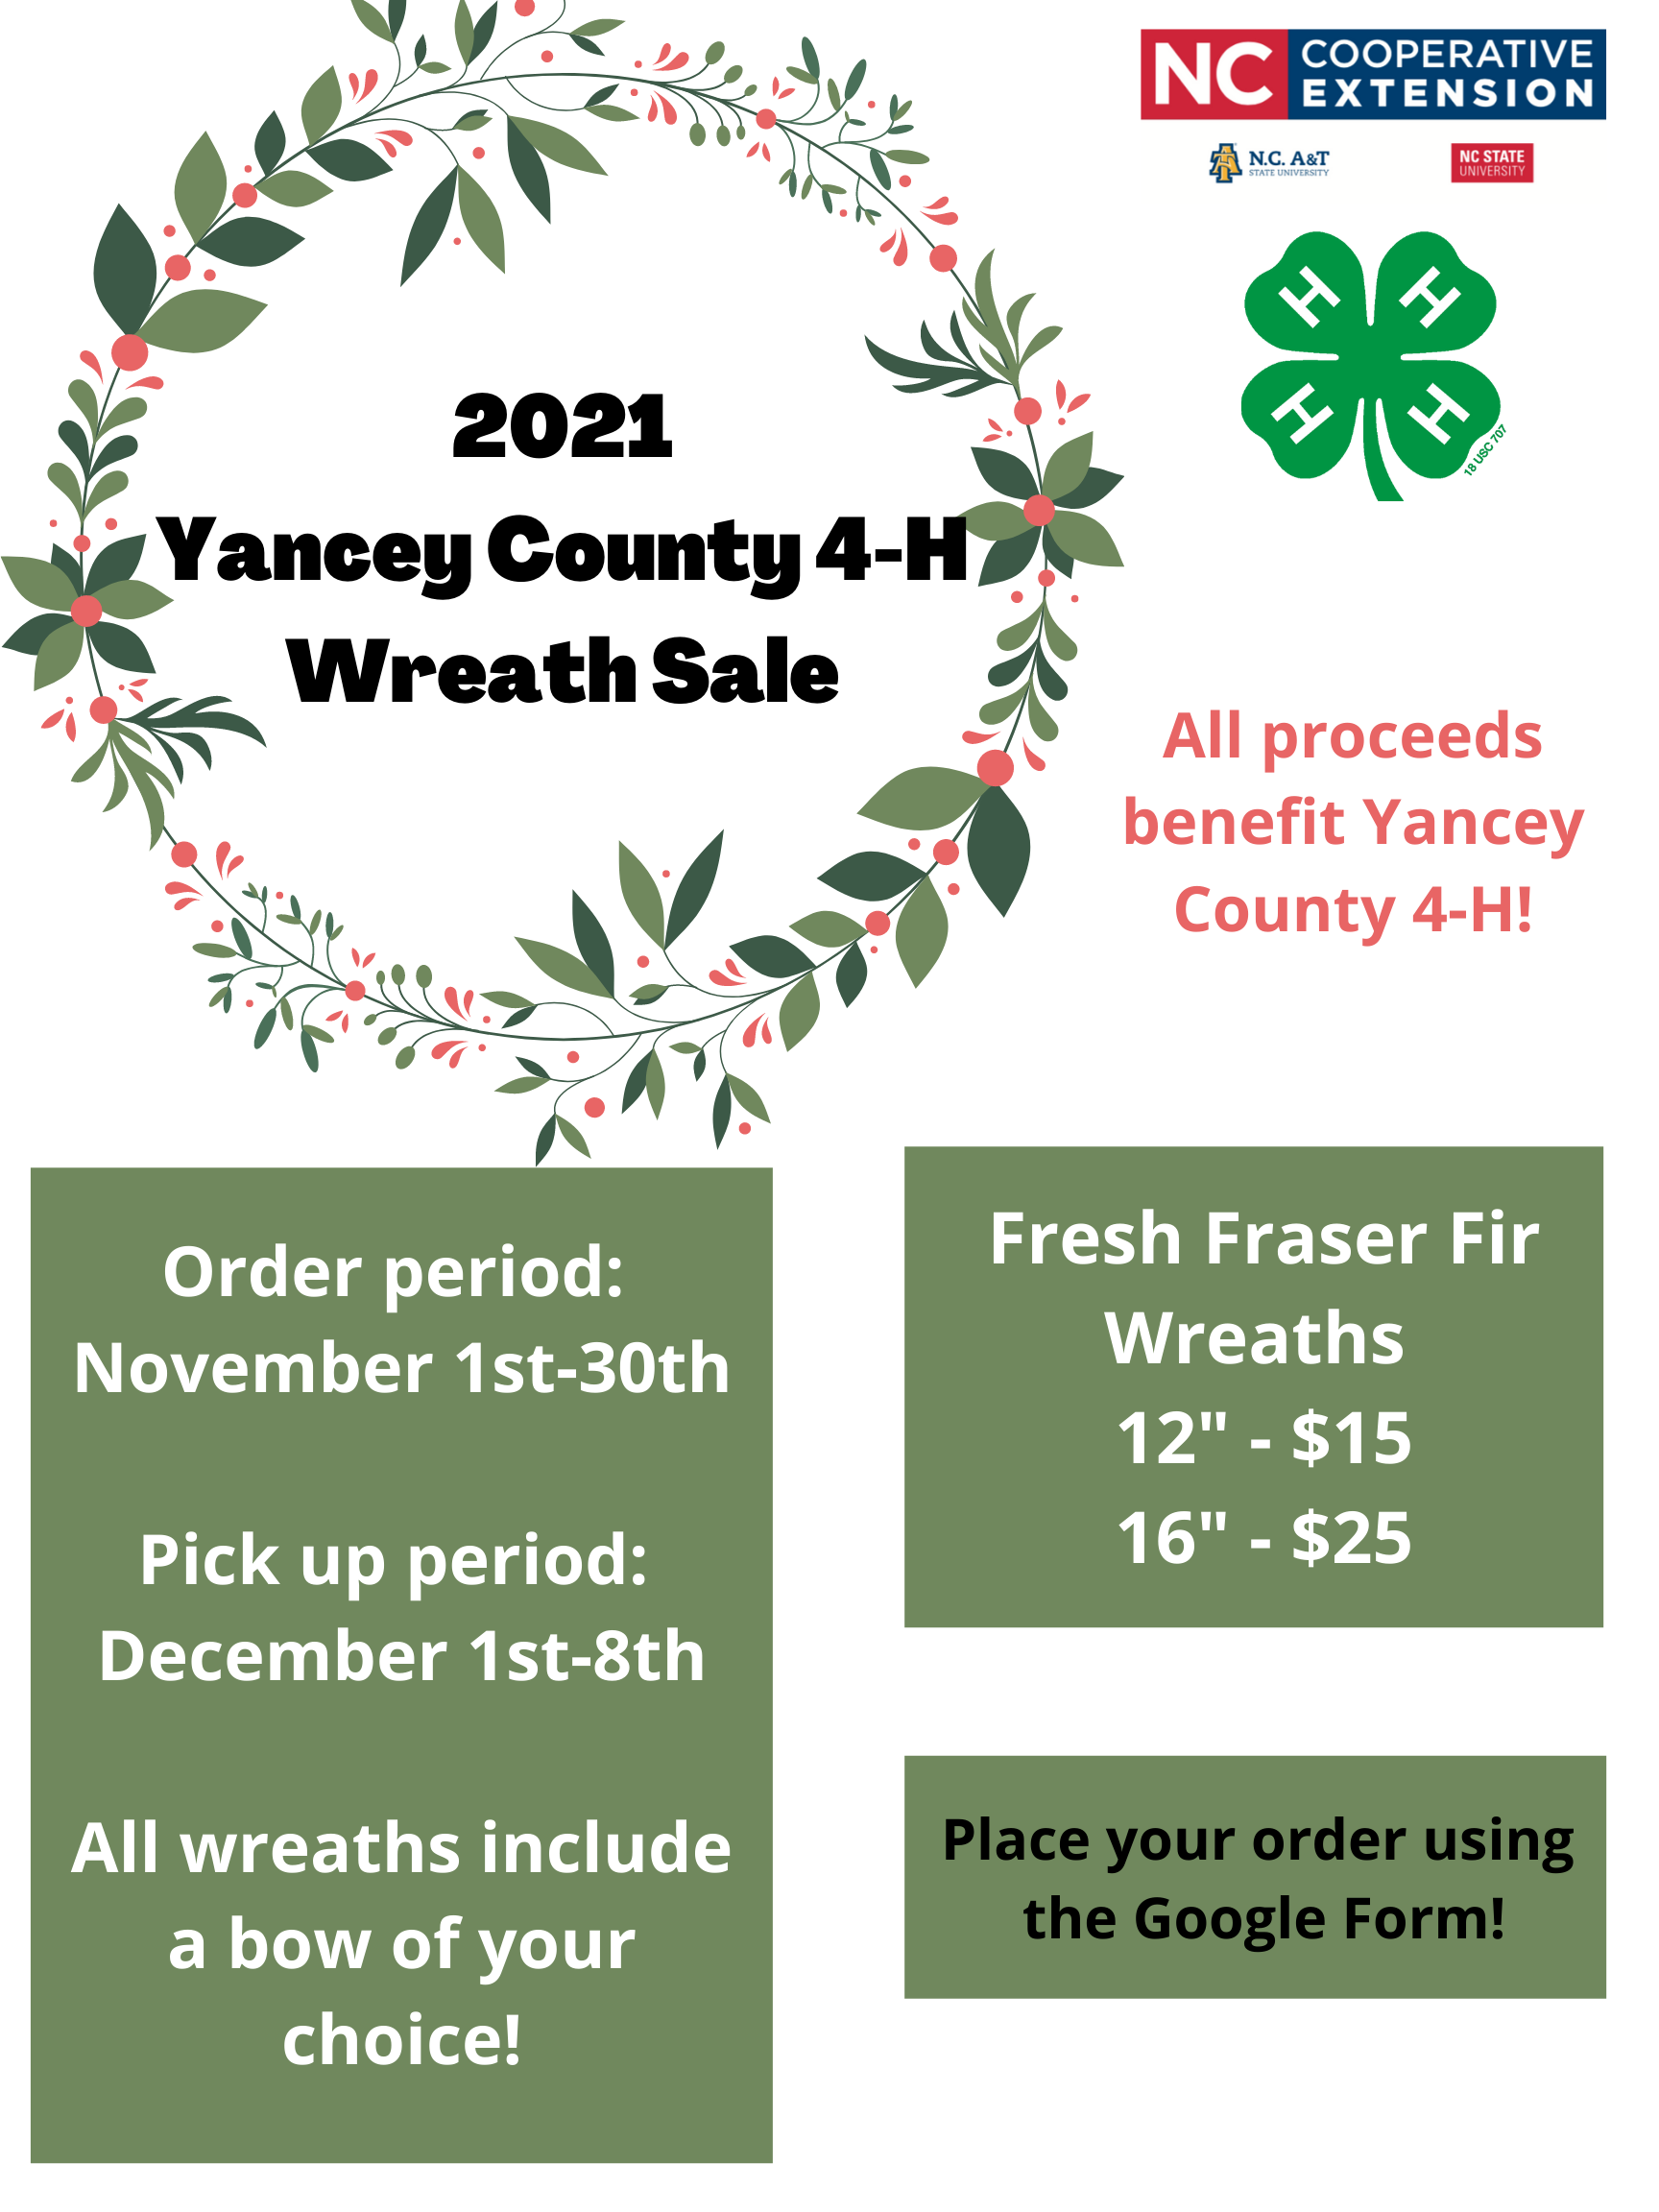 2021 Yancey County 4-H Wreath Sale flyer